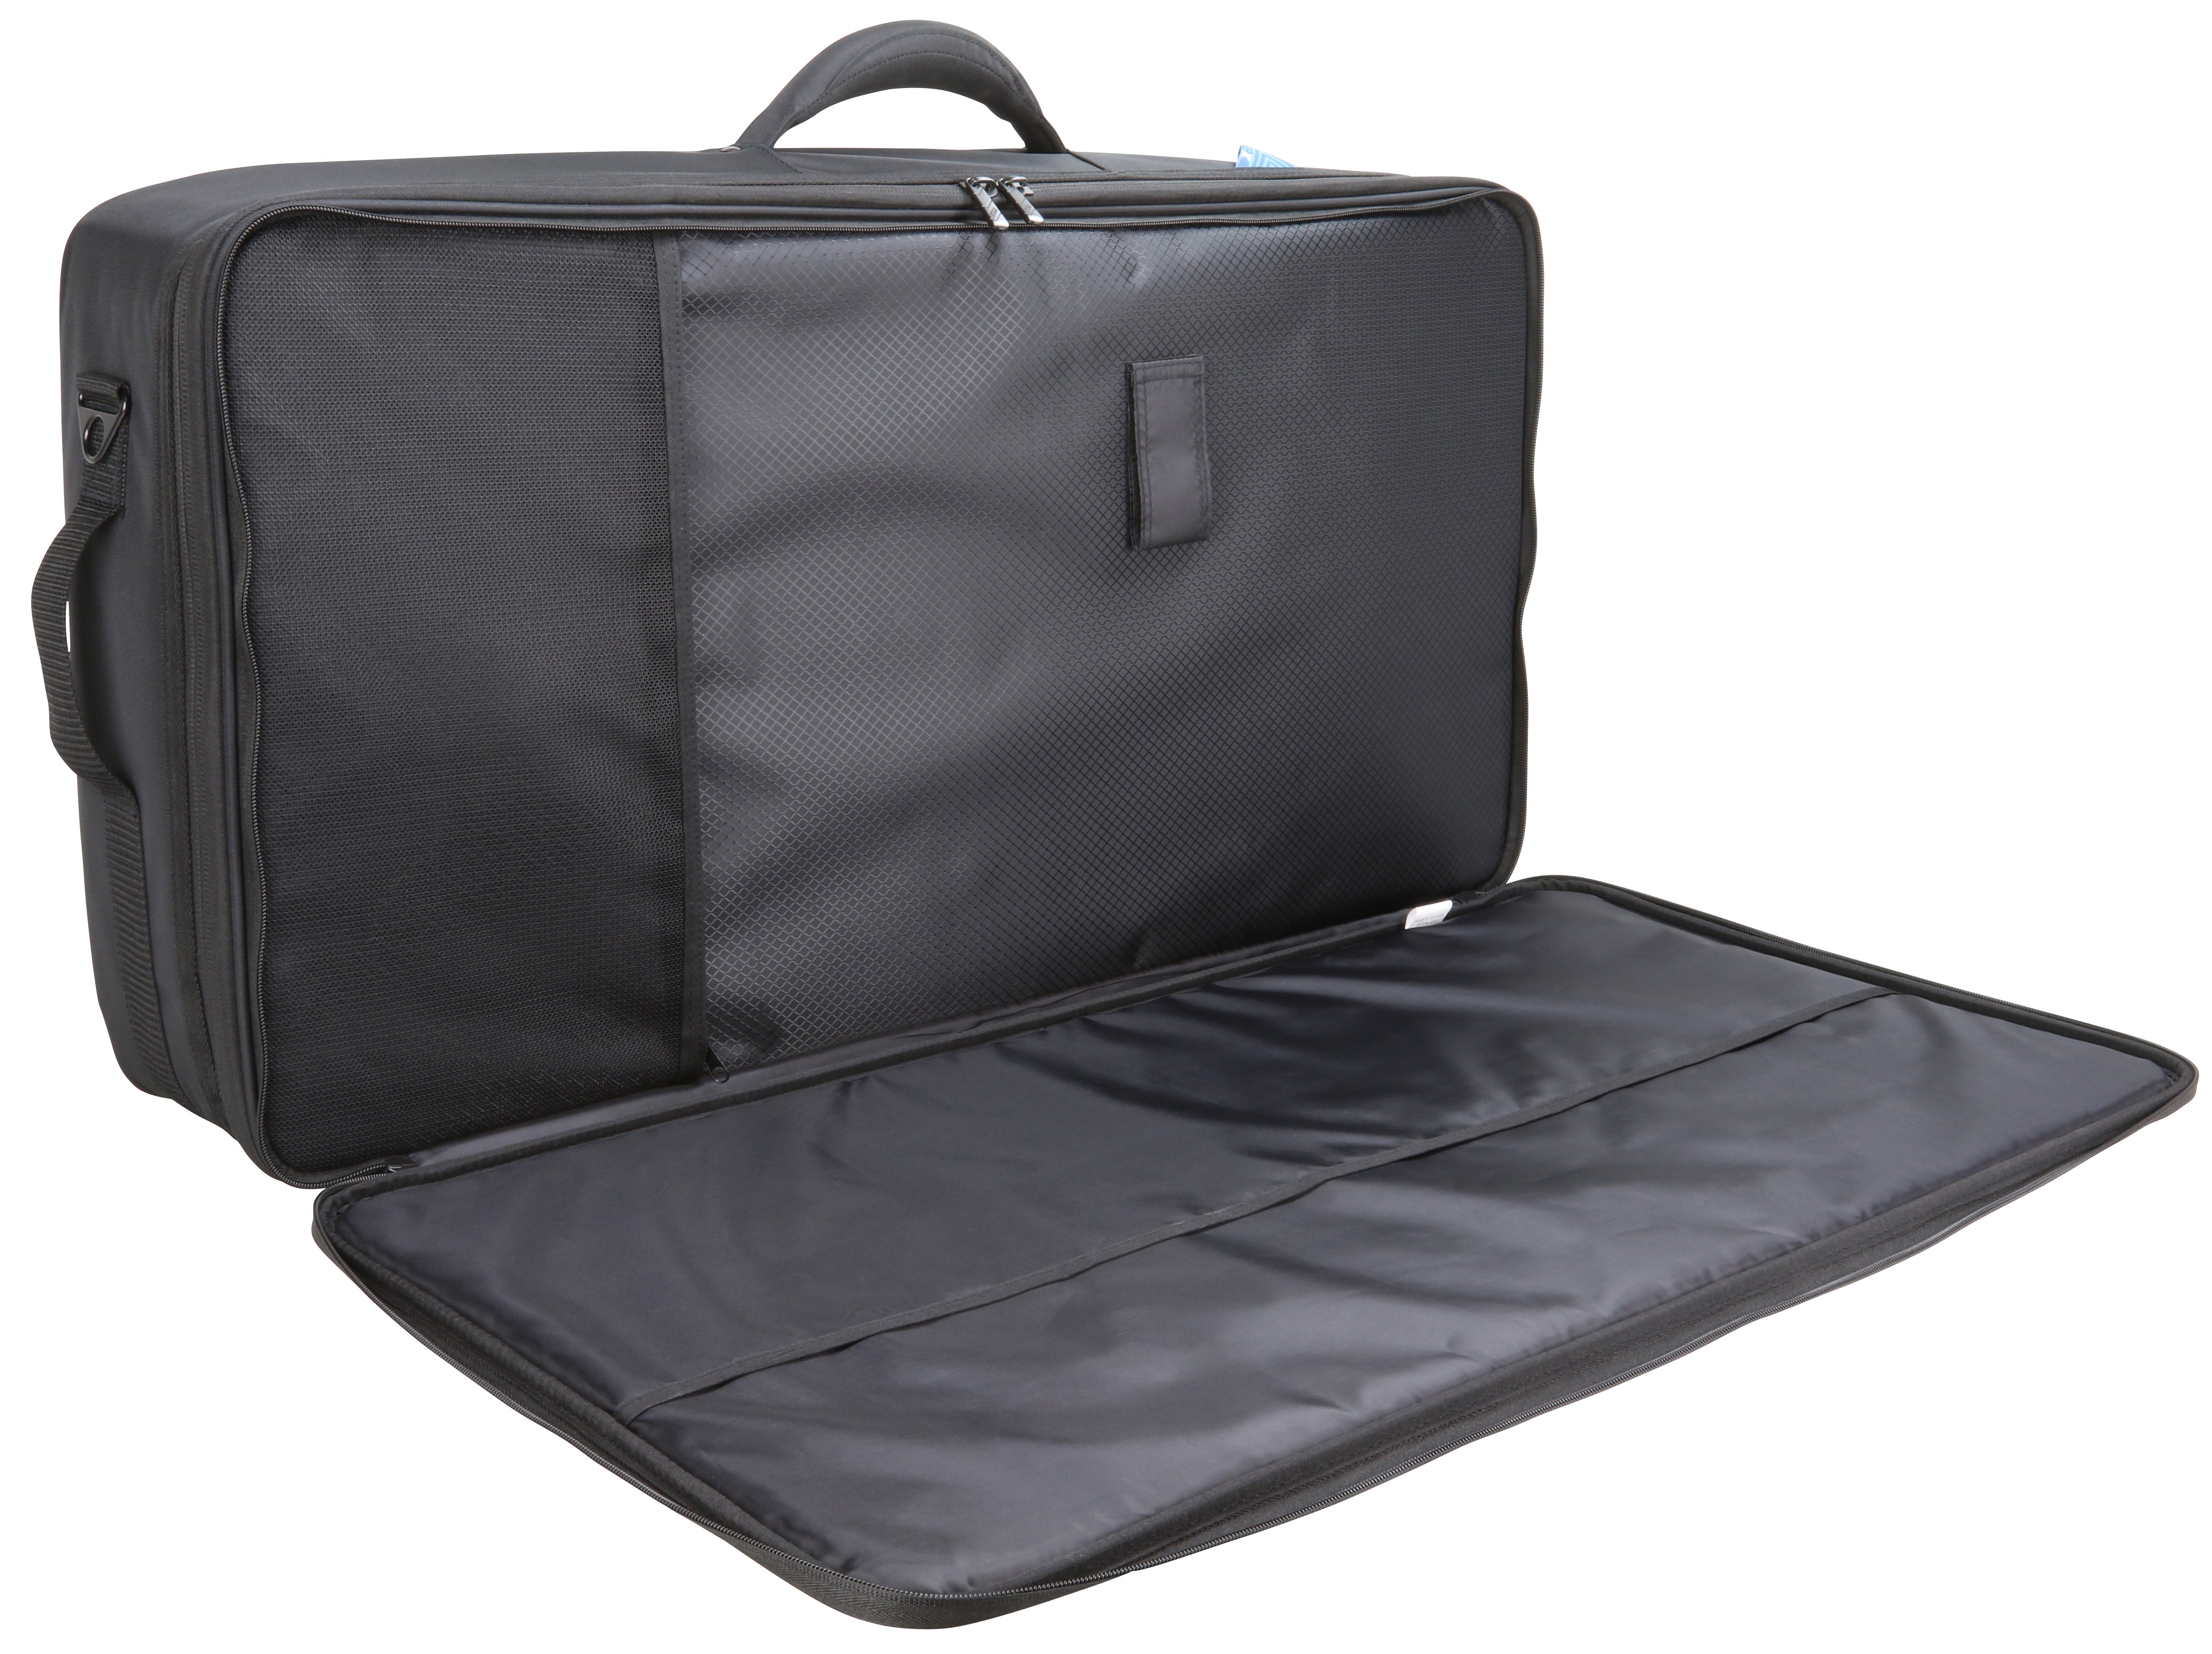 RBX Pedalboard/Gear Bag 32x16 - Large Pocket